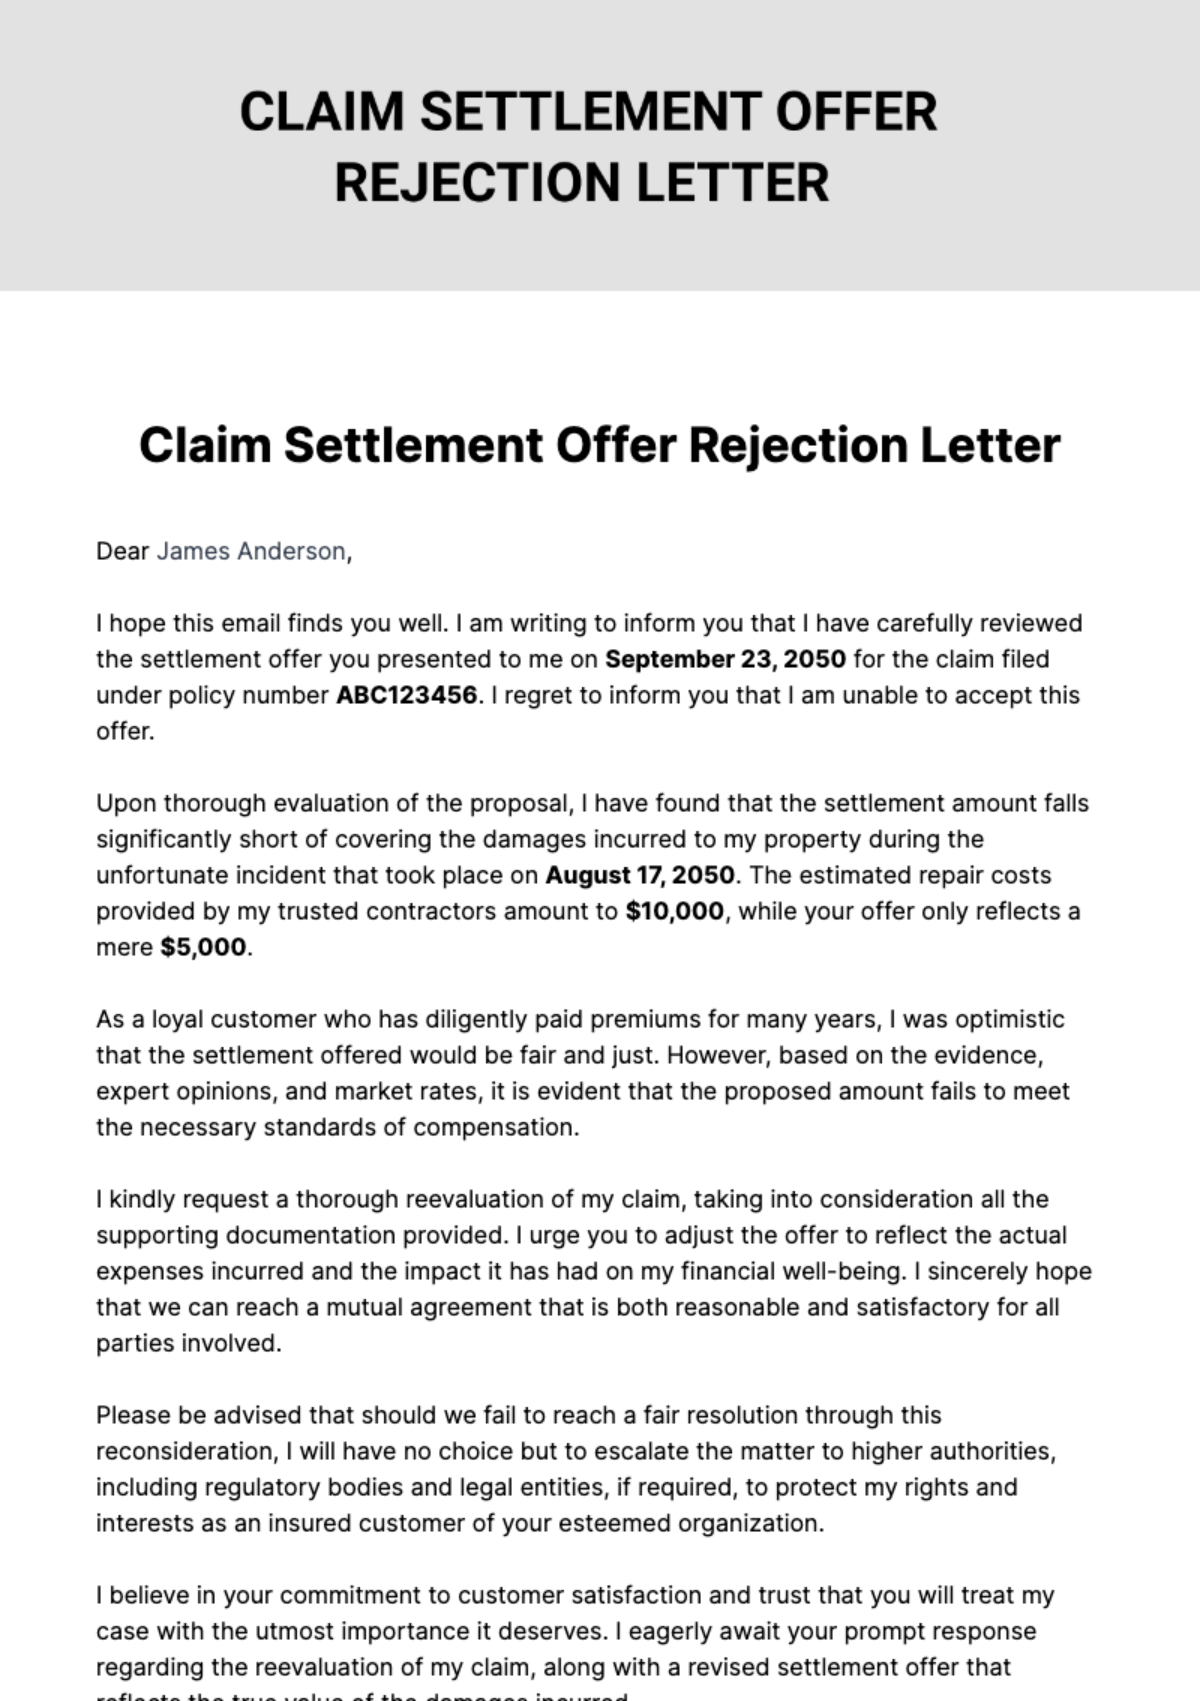 Claim Settlement Offer Rejection Letter Template